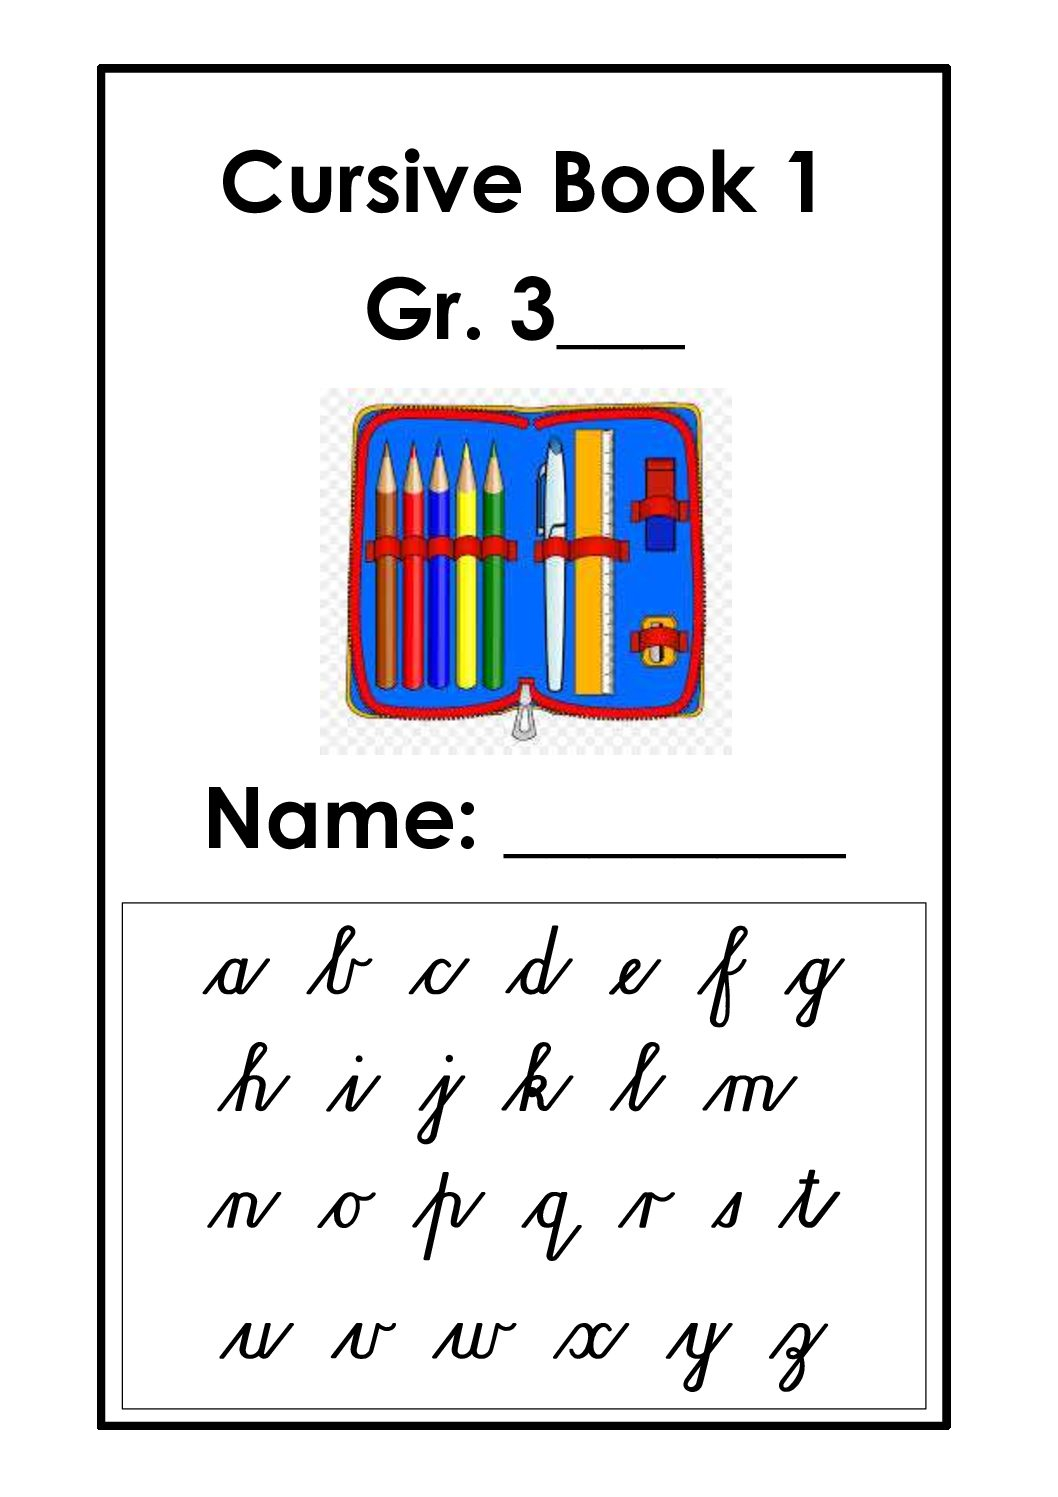 Grade 3 Cursive Handwriting Book 1